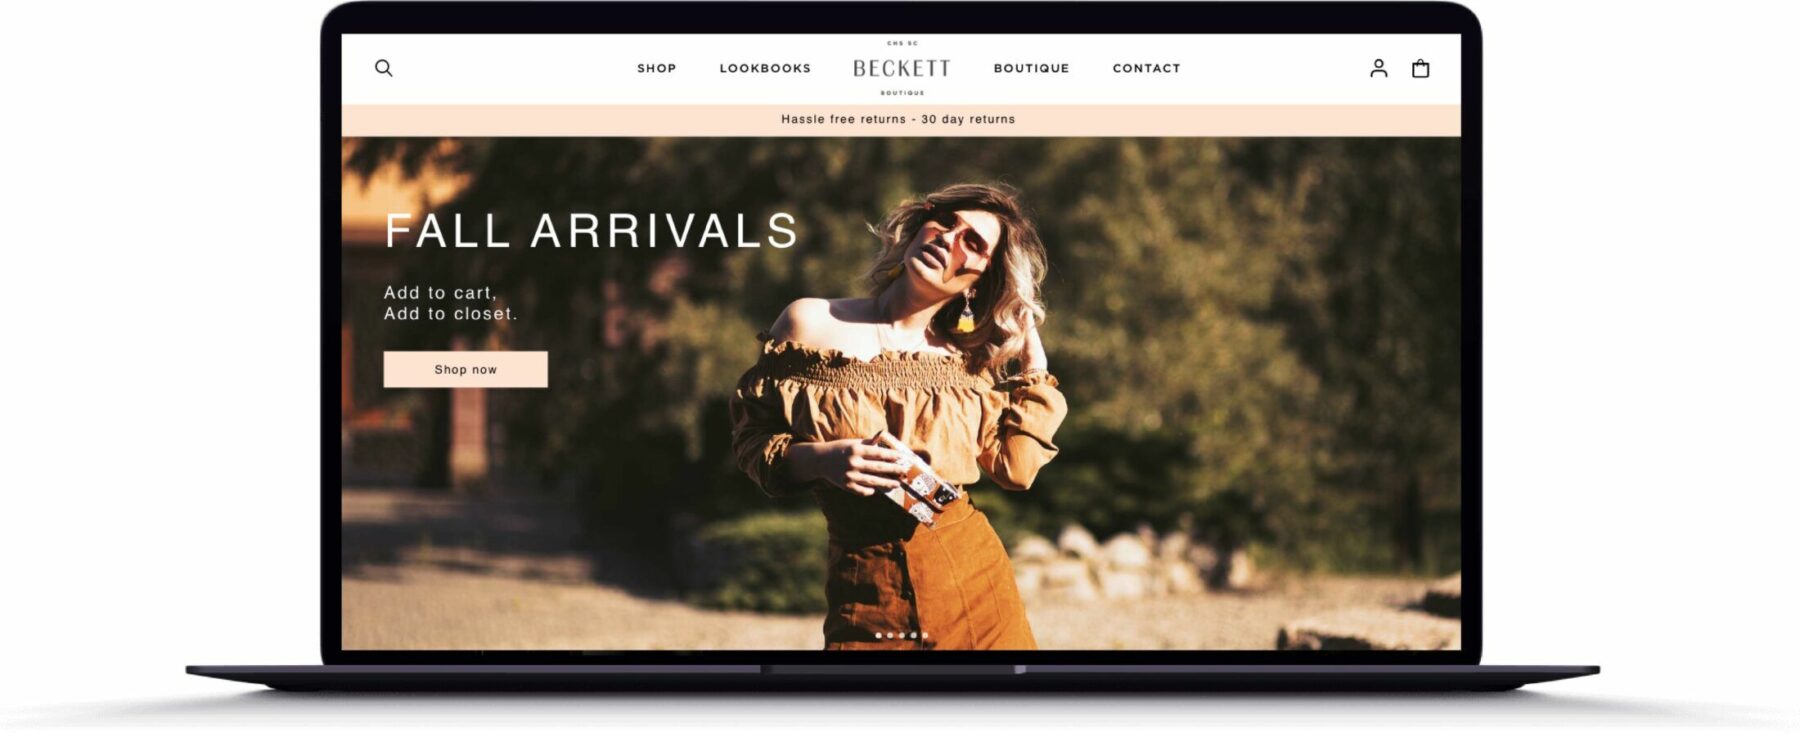 Becket Boutique Shopify Web Design, Charleston, USA